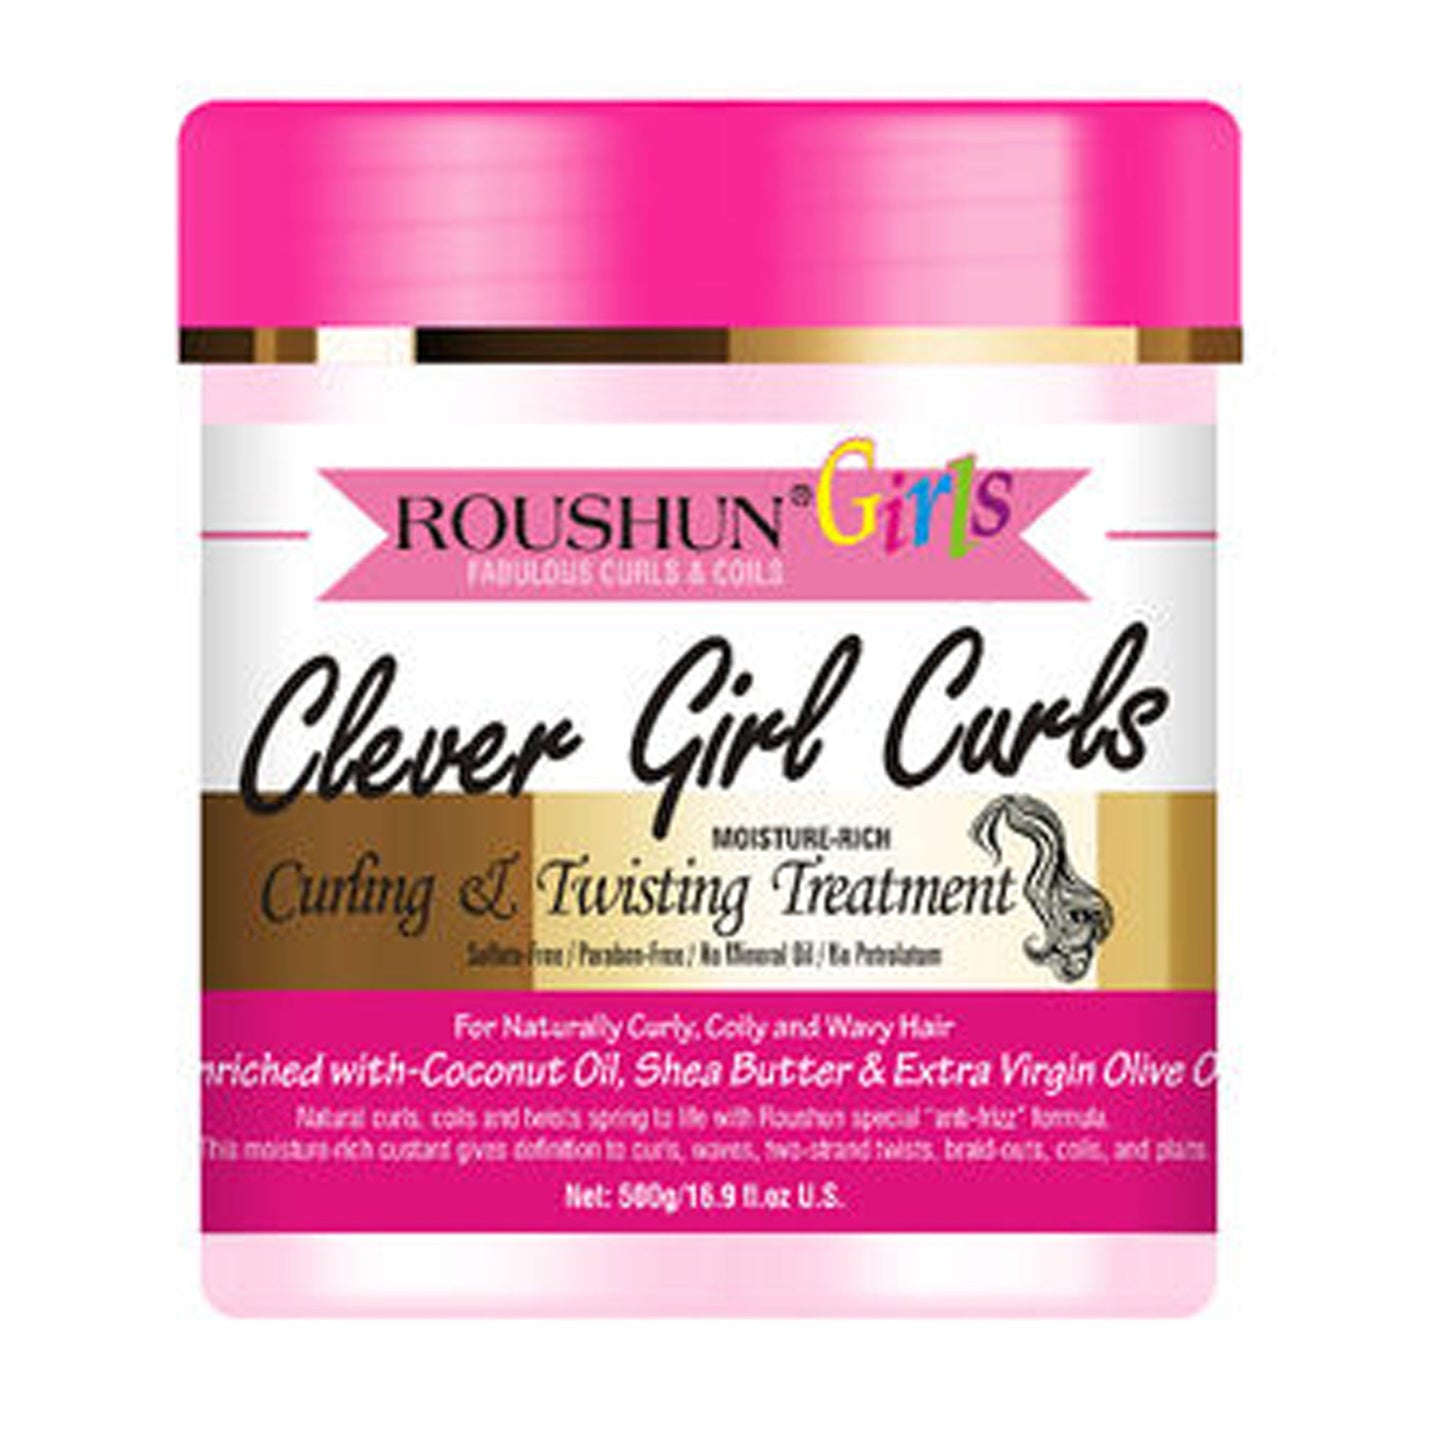 ROUSHUN - CLEVER GIRL CURLS MOISTURE-RICH CURLING & TWISTING TREATMENT - 500G